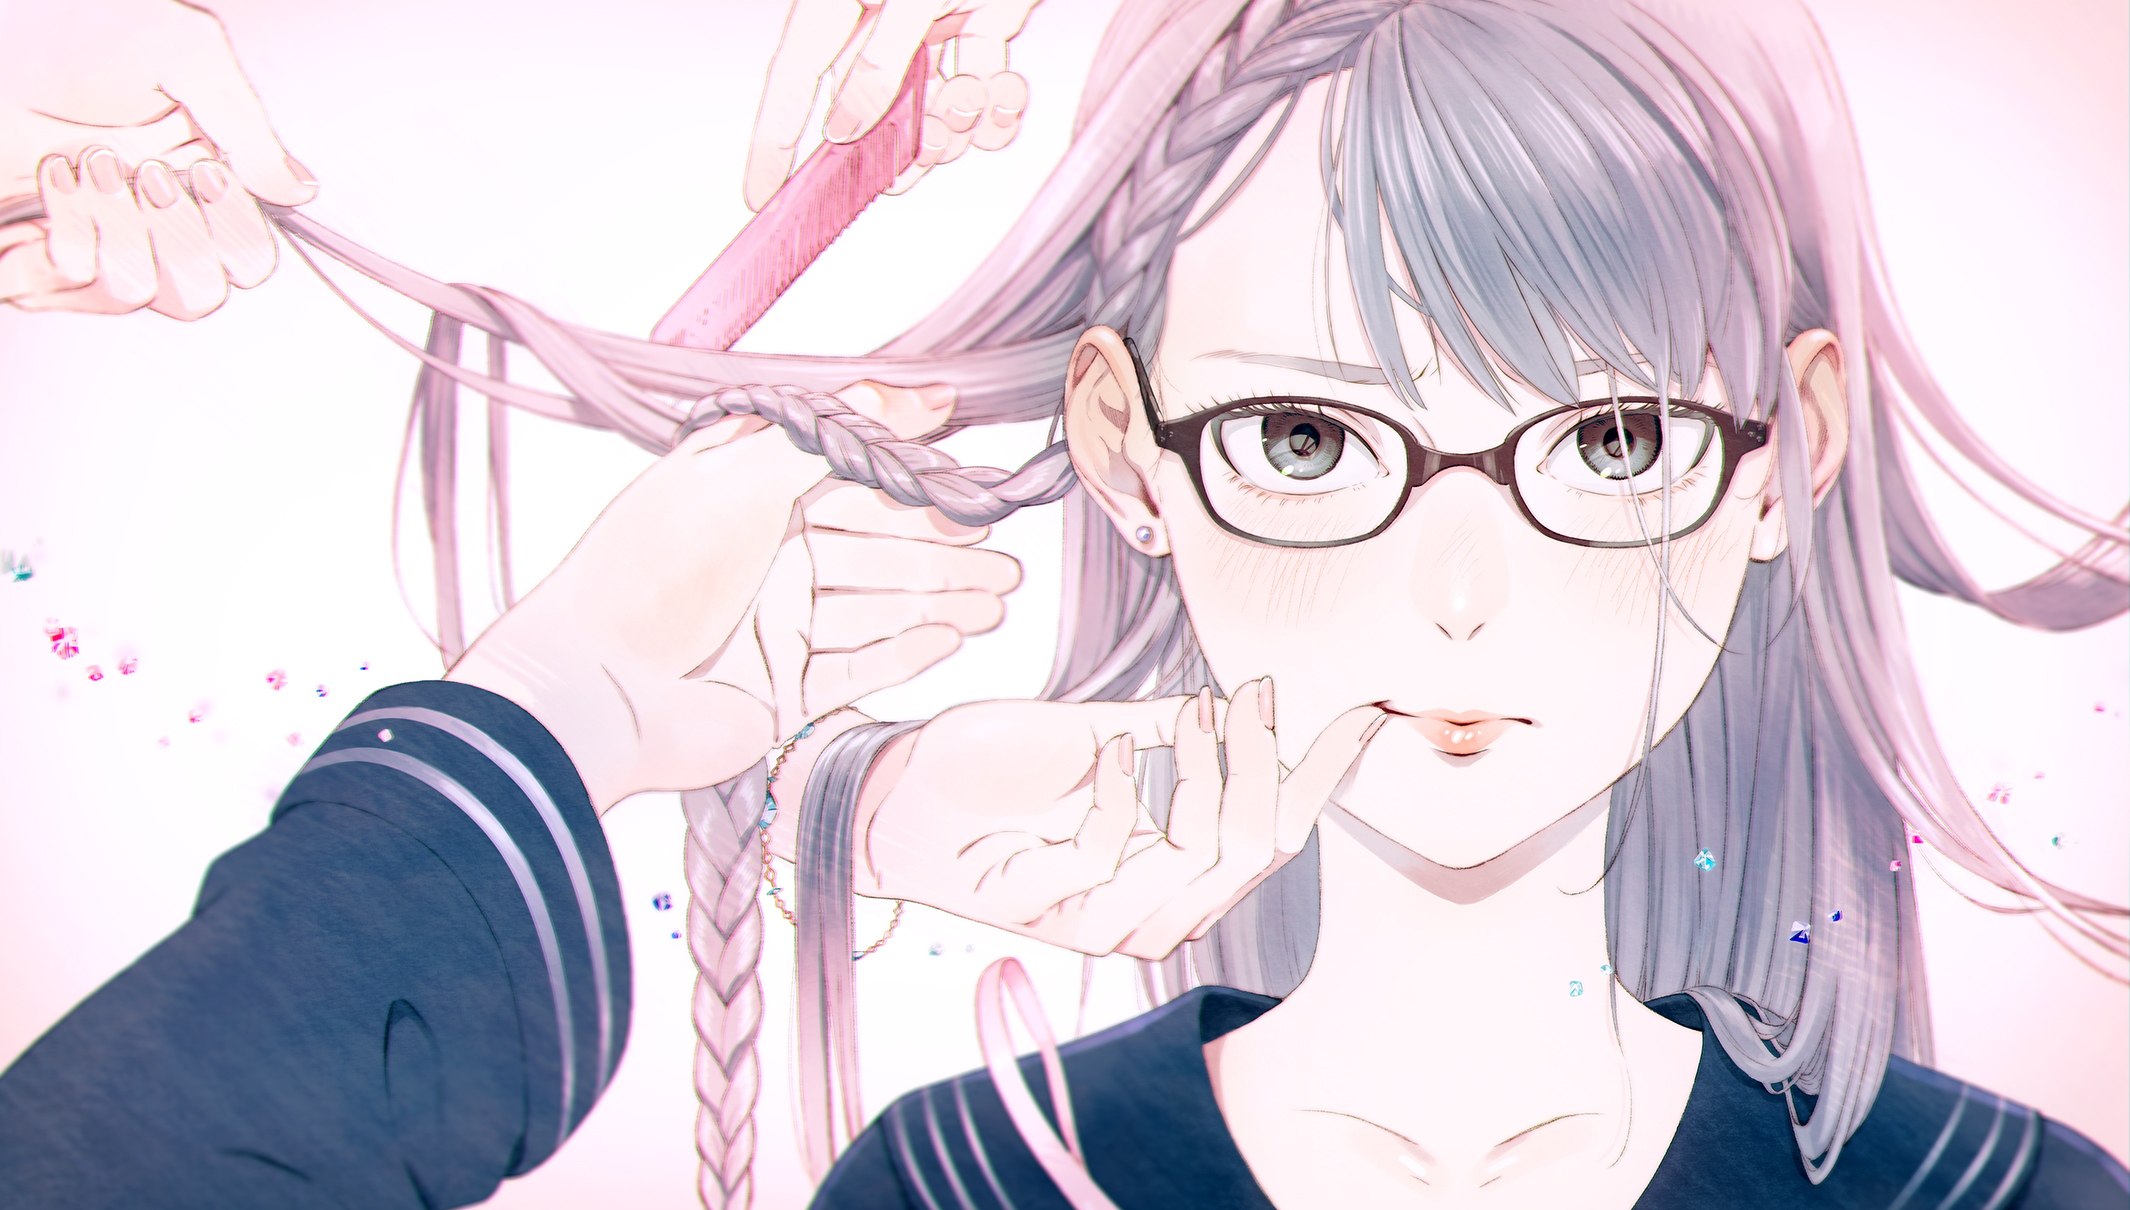 Anime Anime Girls Digital Art Artwork Silver Hair Long Hair Braided Hair Bangs Gray Eyes School Unif 2130x1210